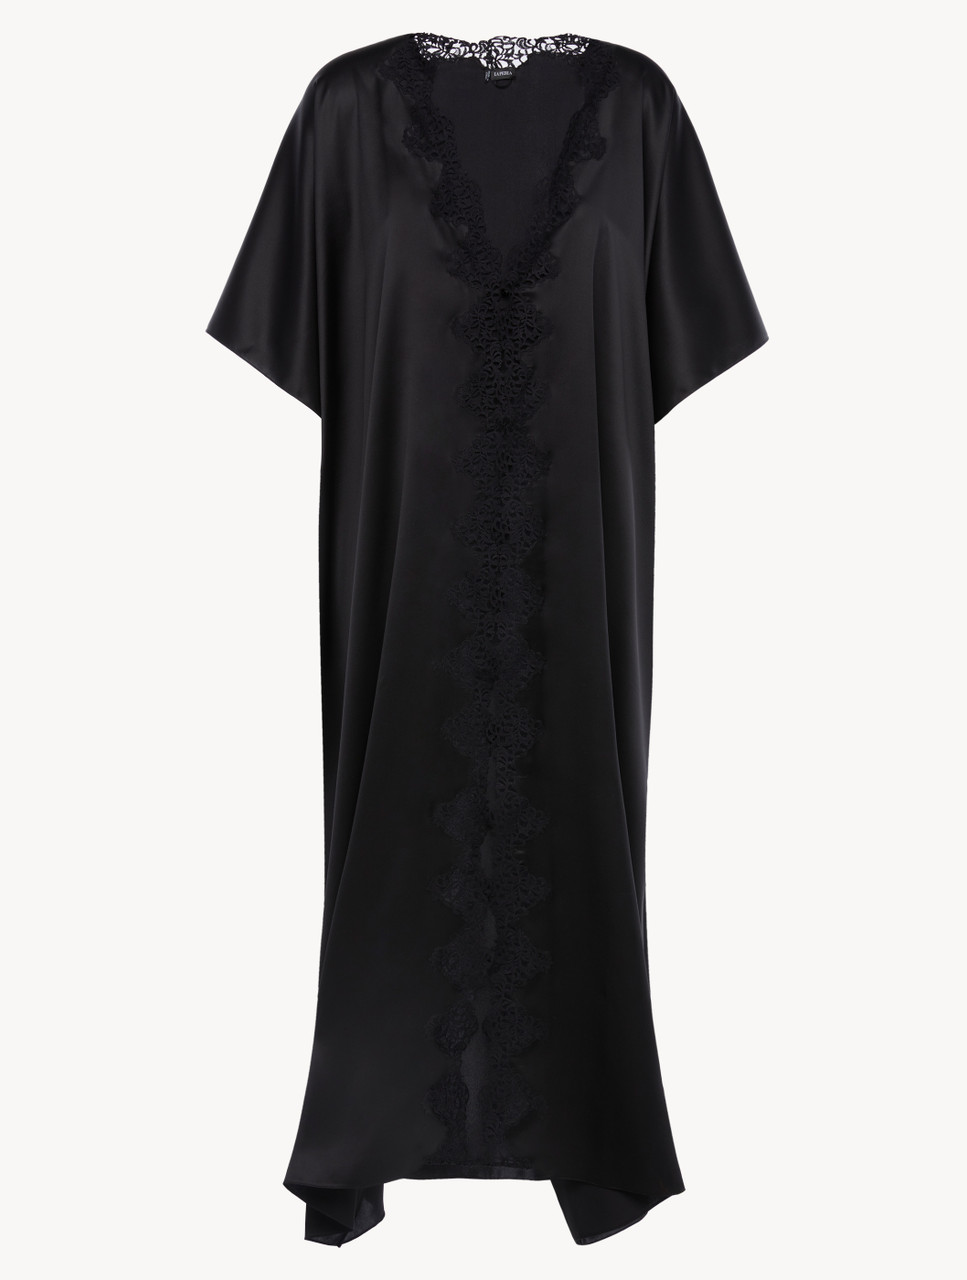 Black silk camisole with macramé frastaglio